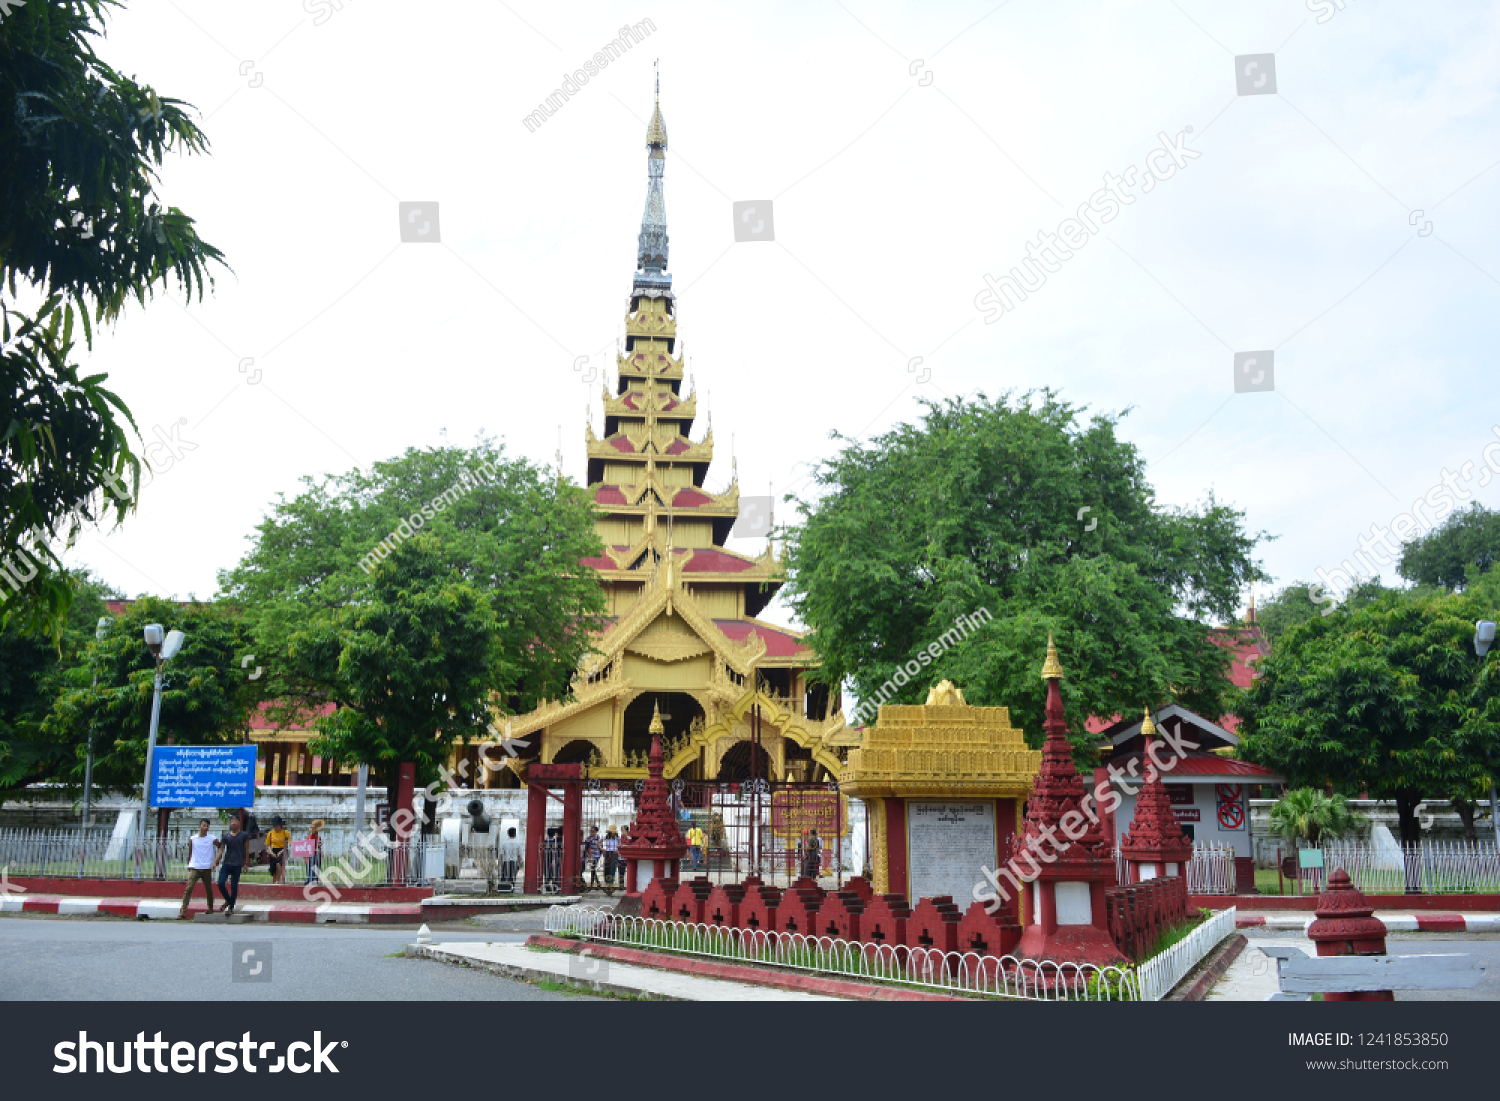 MANDALAY, MYANMAR - OCT 7TH, 2018: Mandalay Palace, the ancient Royal Palace of Mandalay, Myanmar, on Oct 7th, 2018 #1241853850